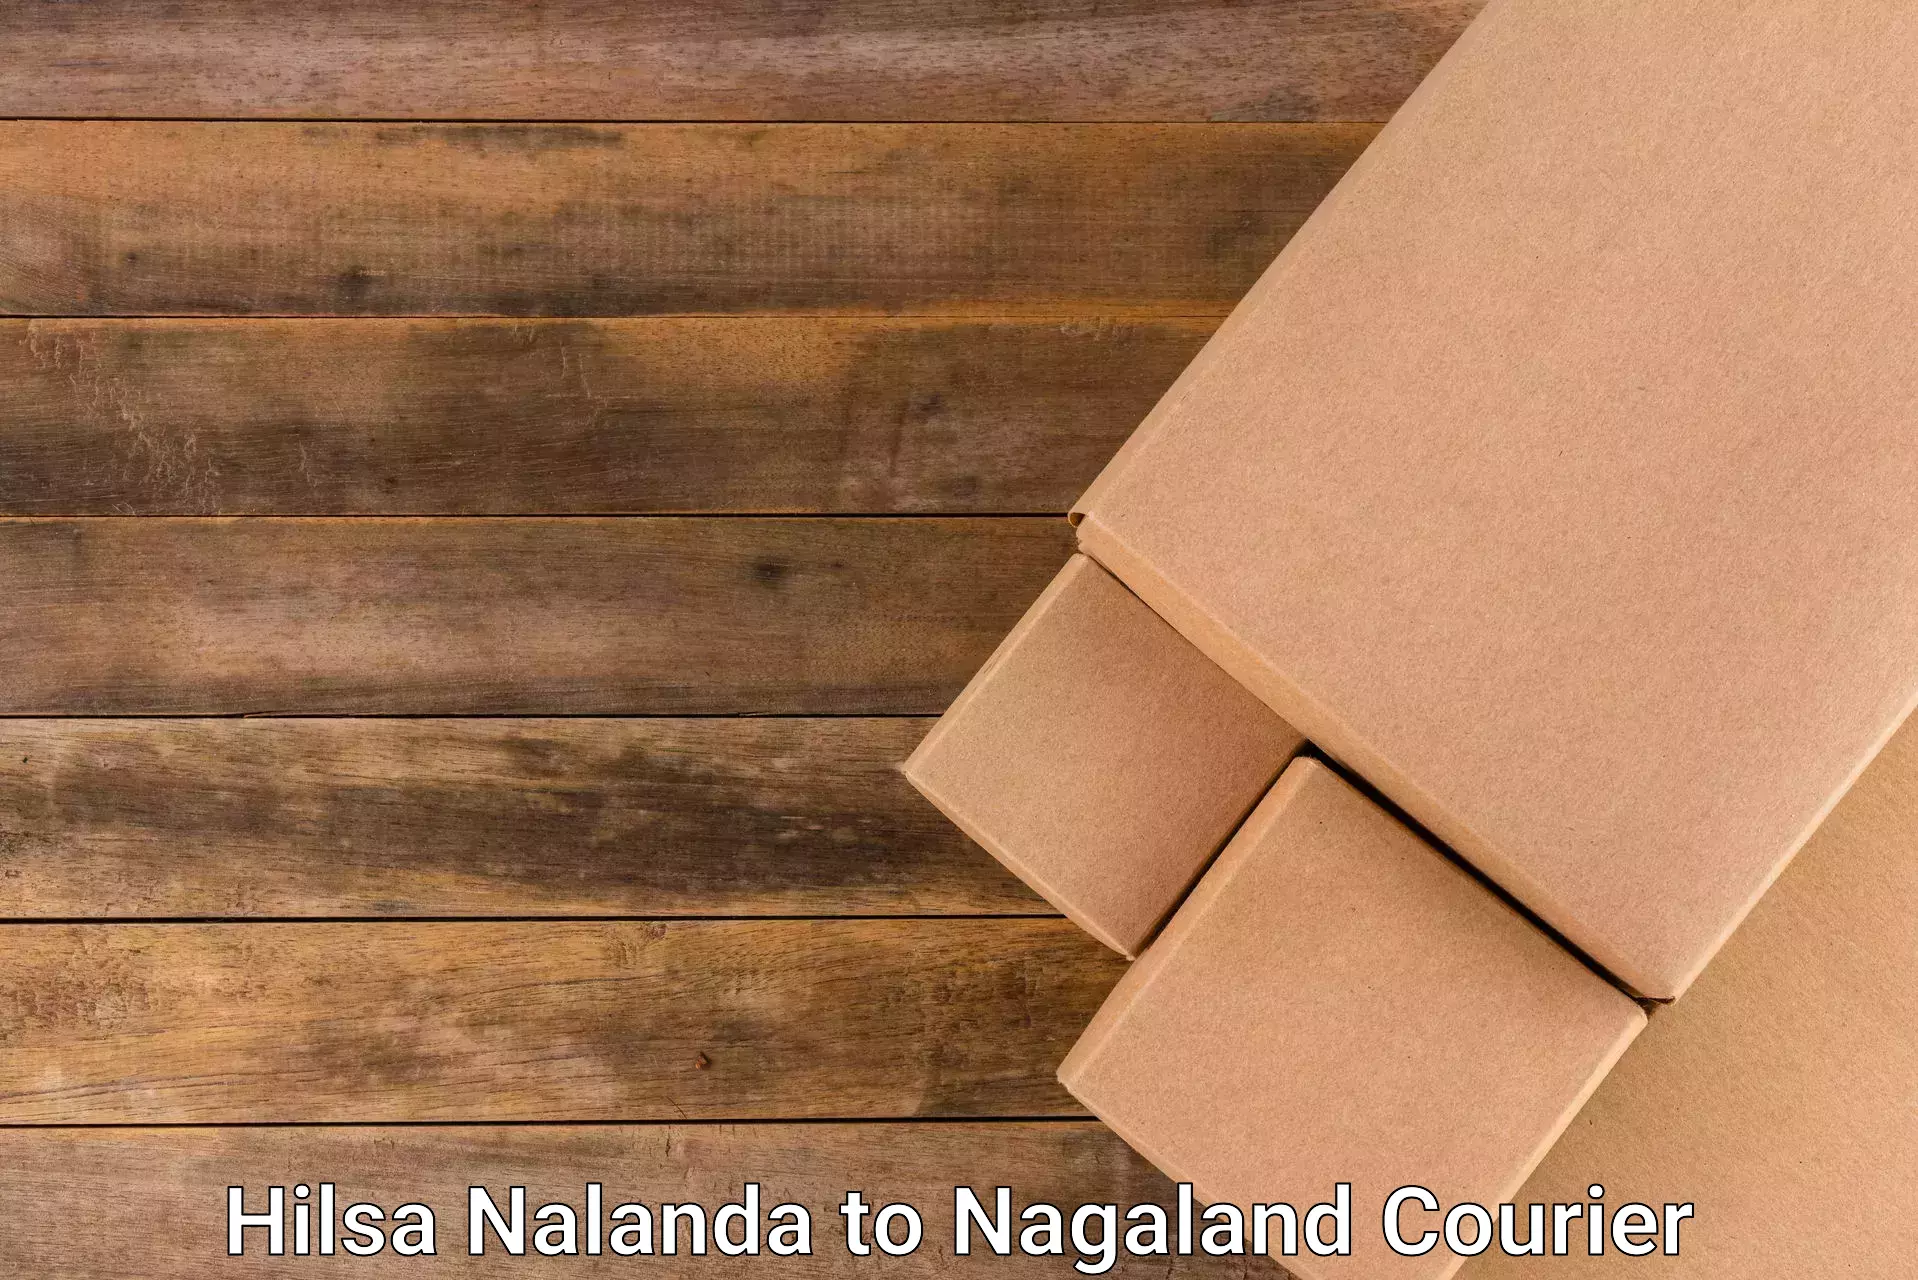 Full-service courier options Hilsa Nalanda to Nagaland